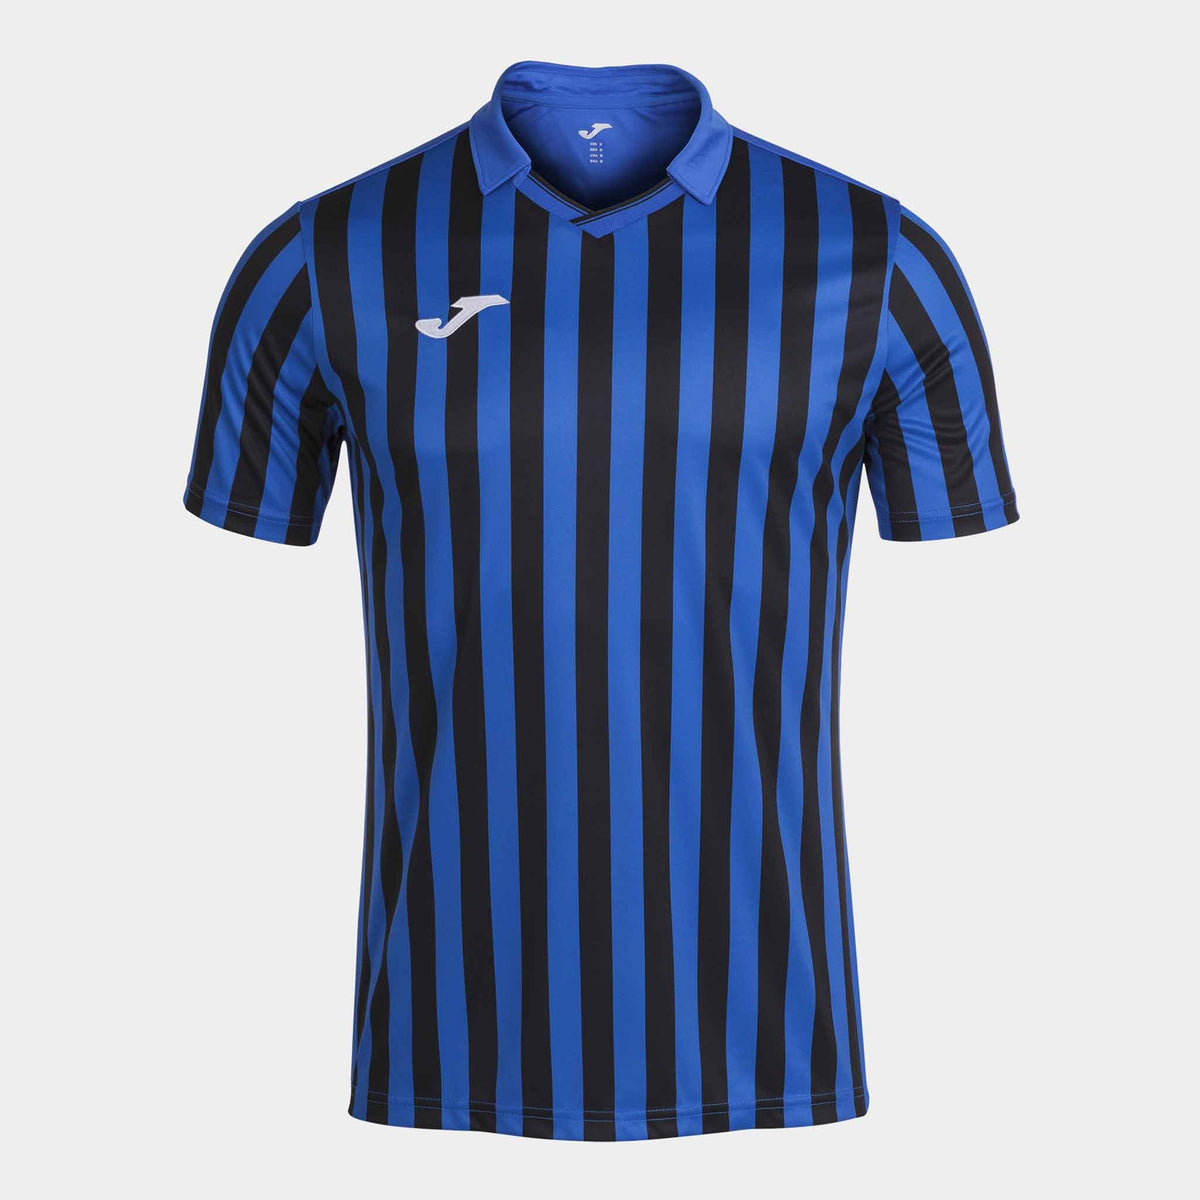 Joma Copa II chandail de soccer - Bleu Royal / Noir